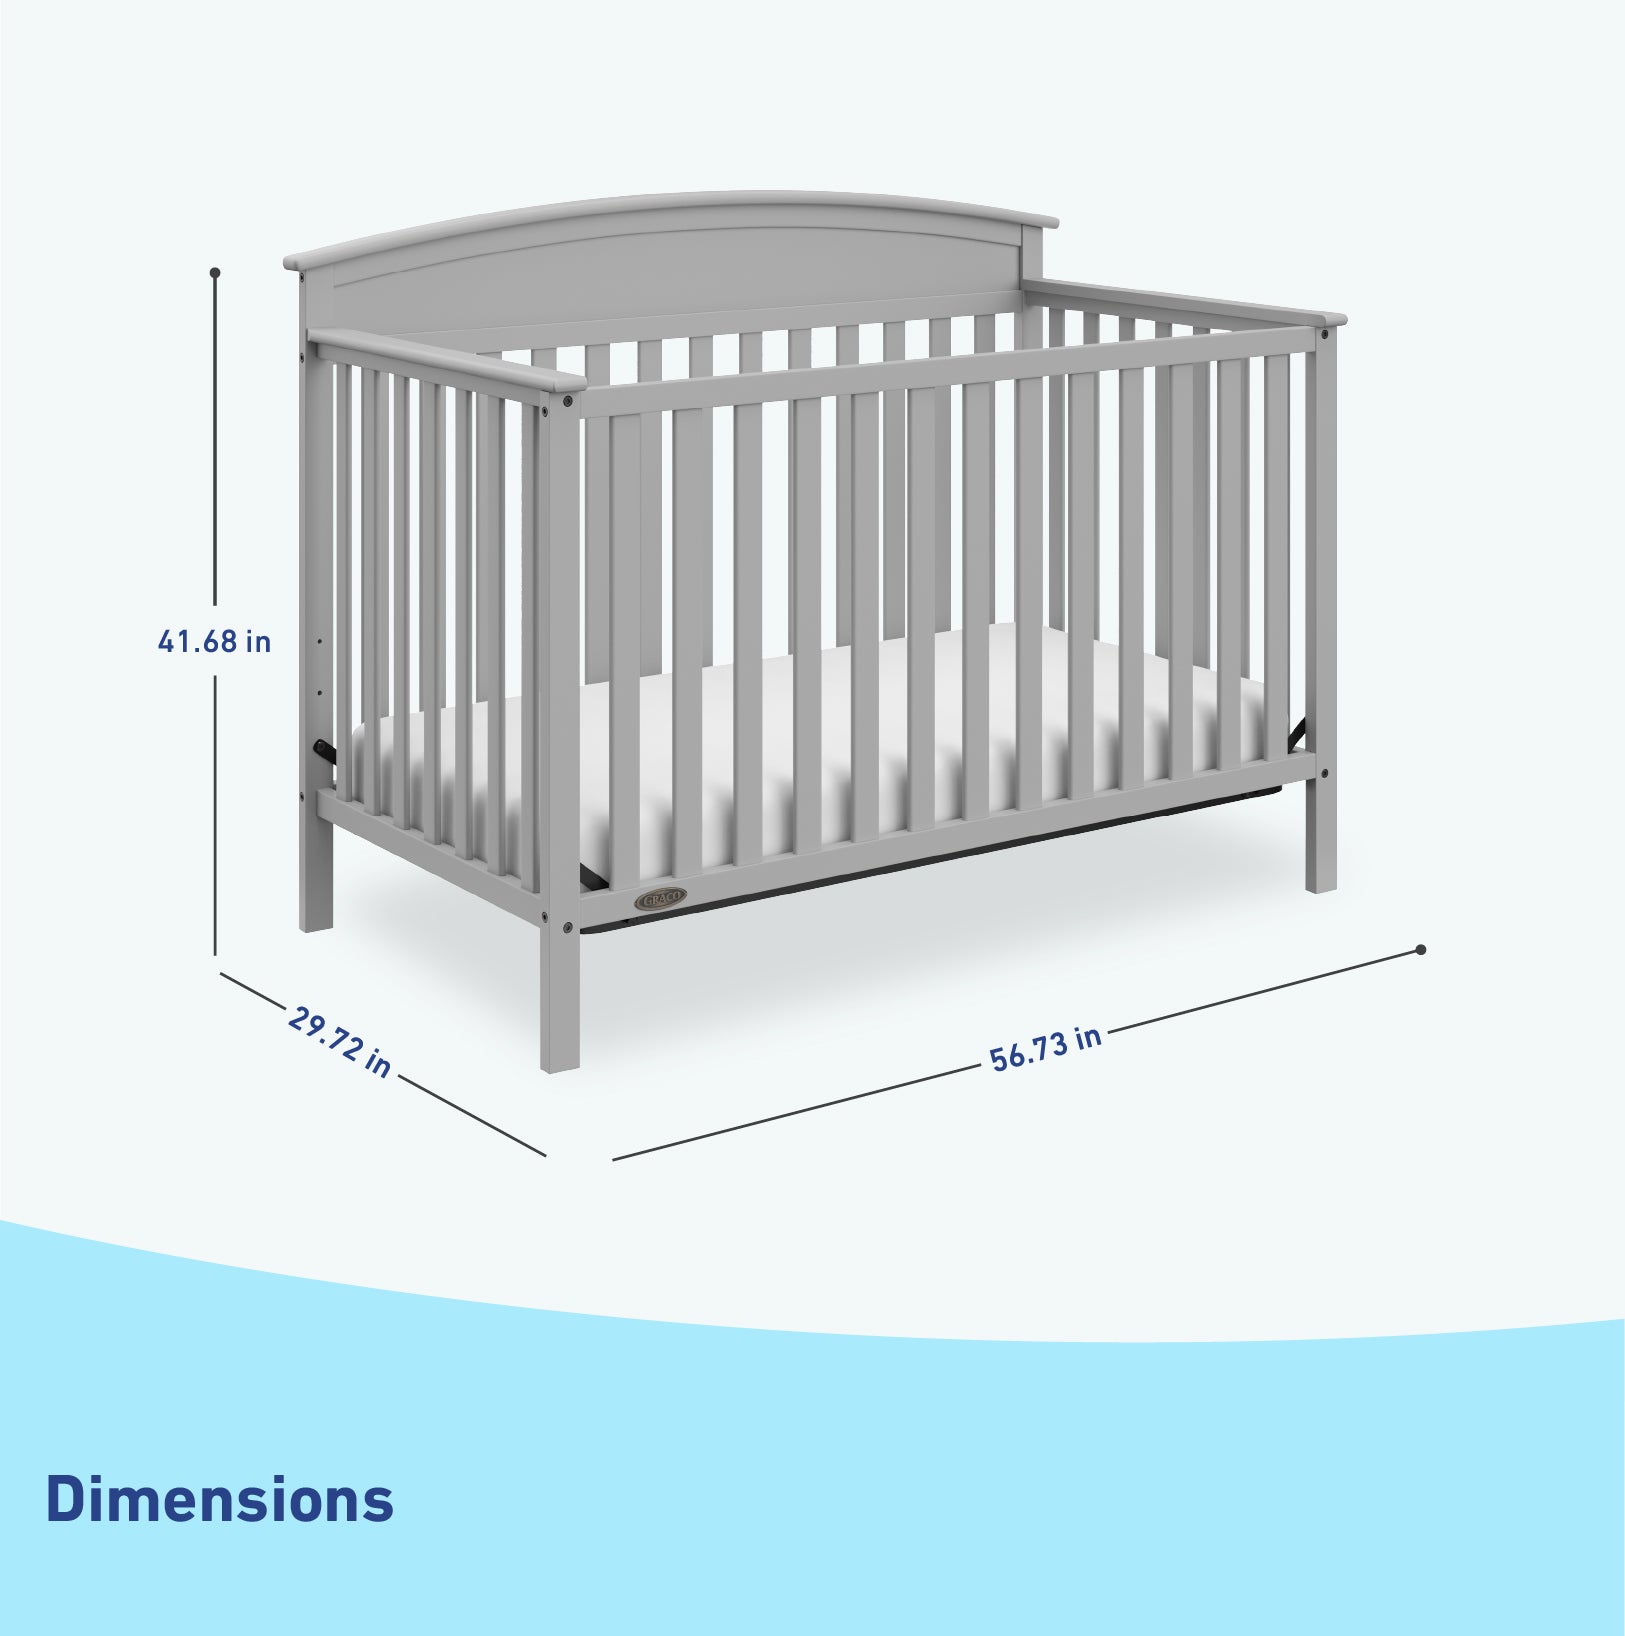 pebble gray crib dimensions graphic